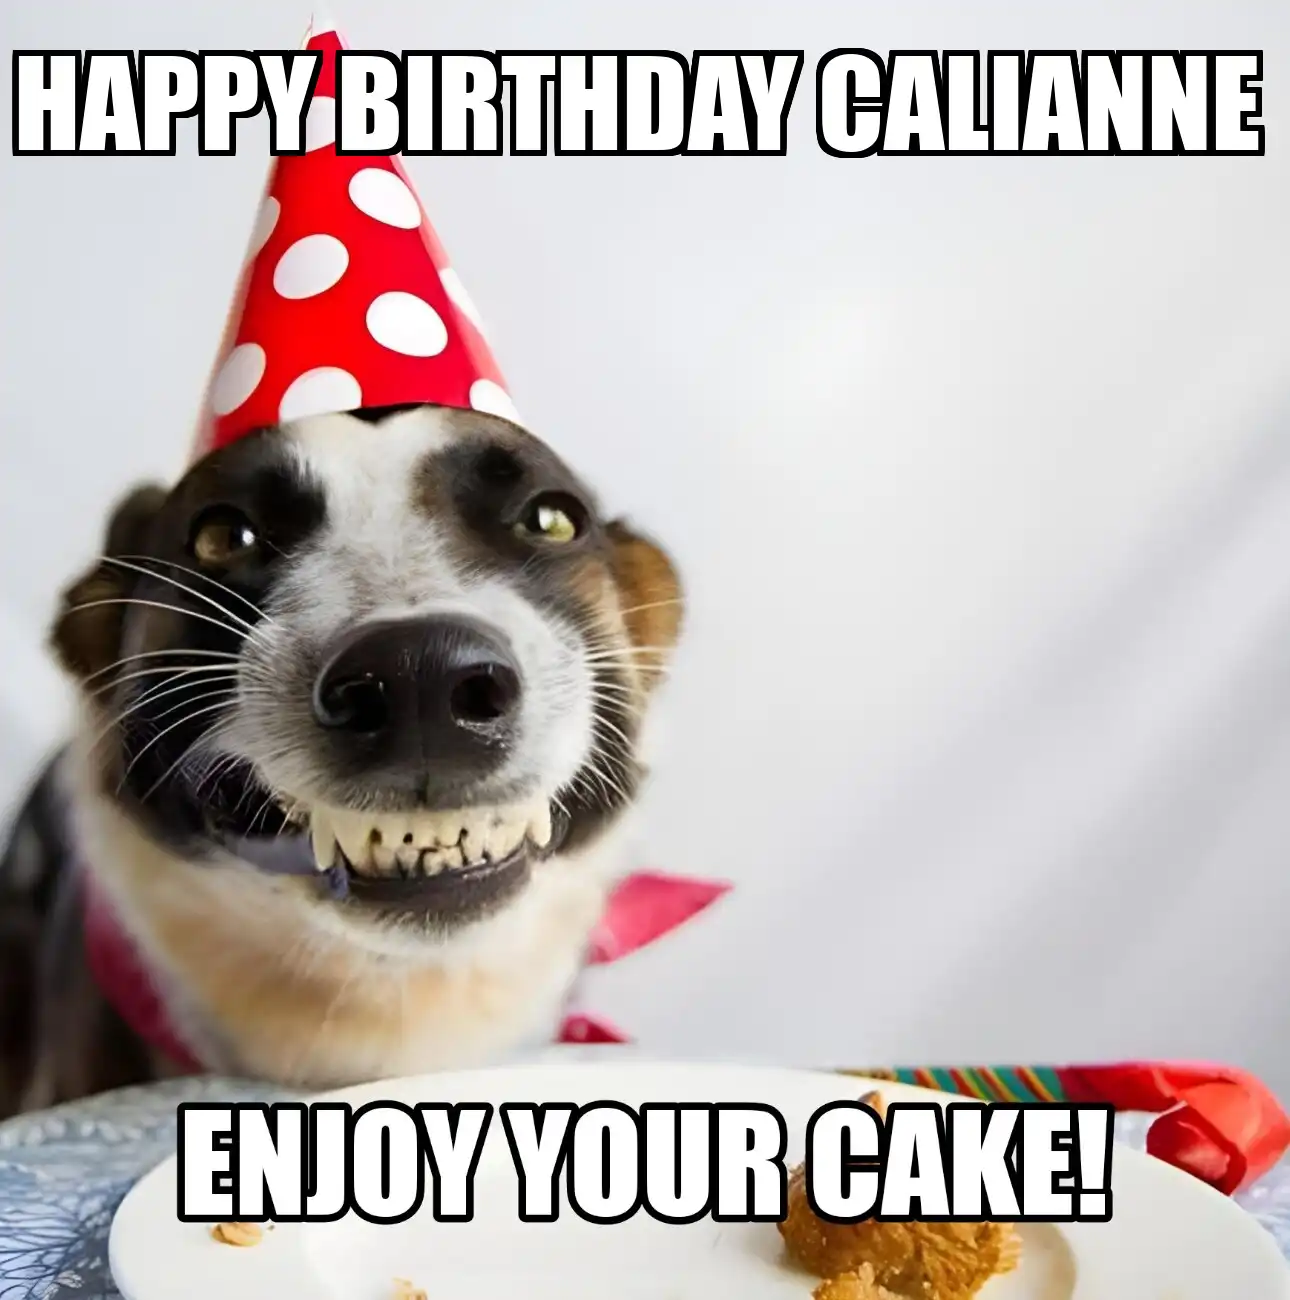 Happy Birthday Calianne Enjoy Your Cake Dog Meme